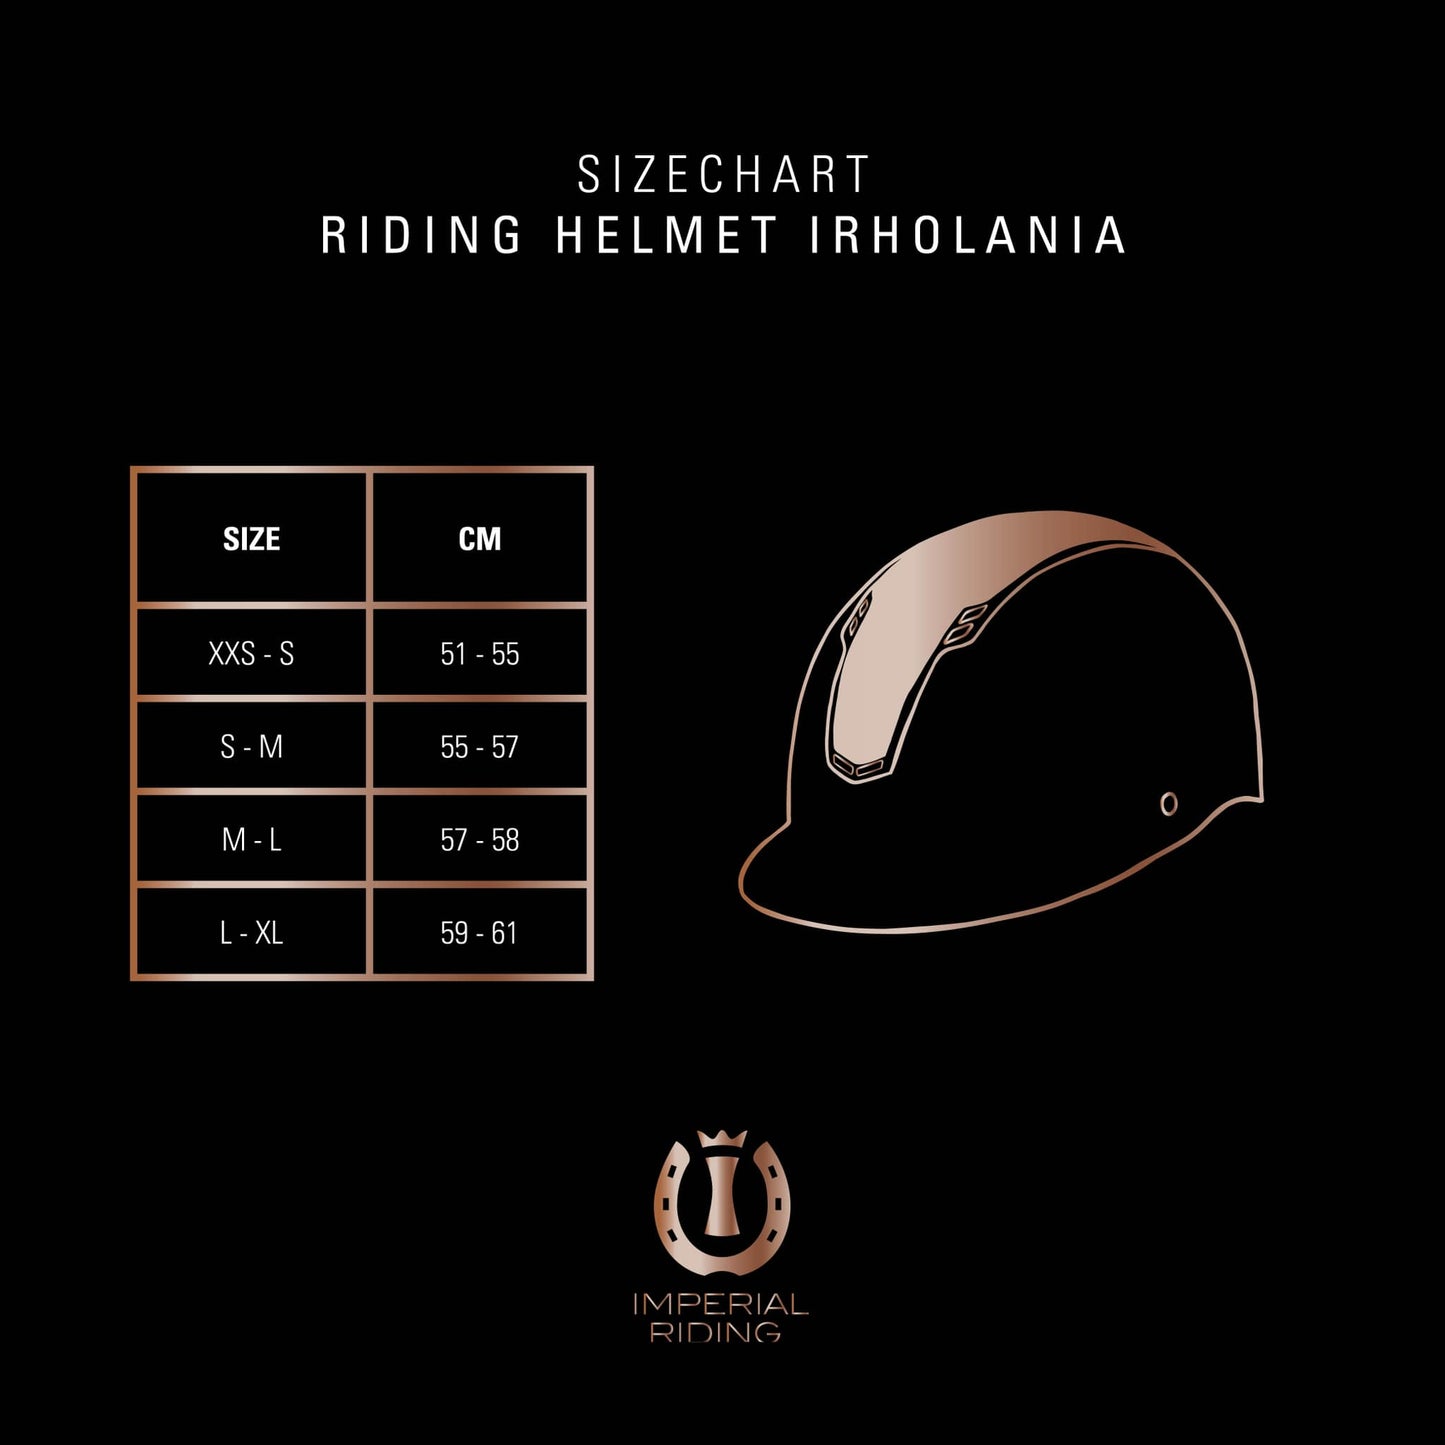 Riding helmet IRHOlania